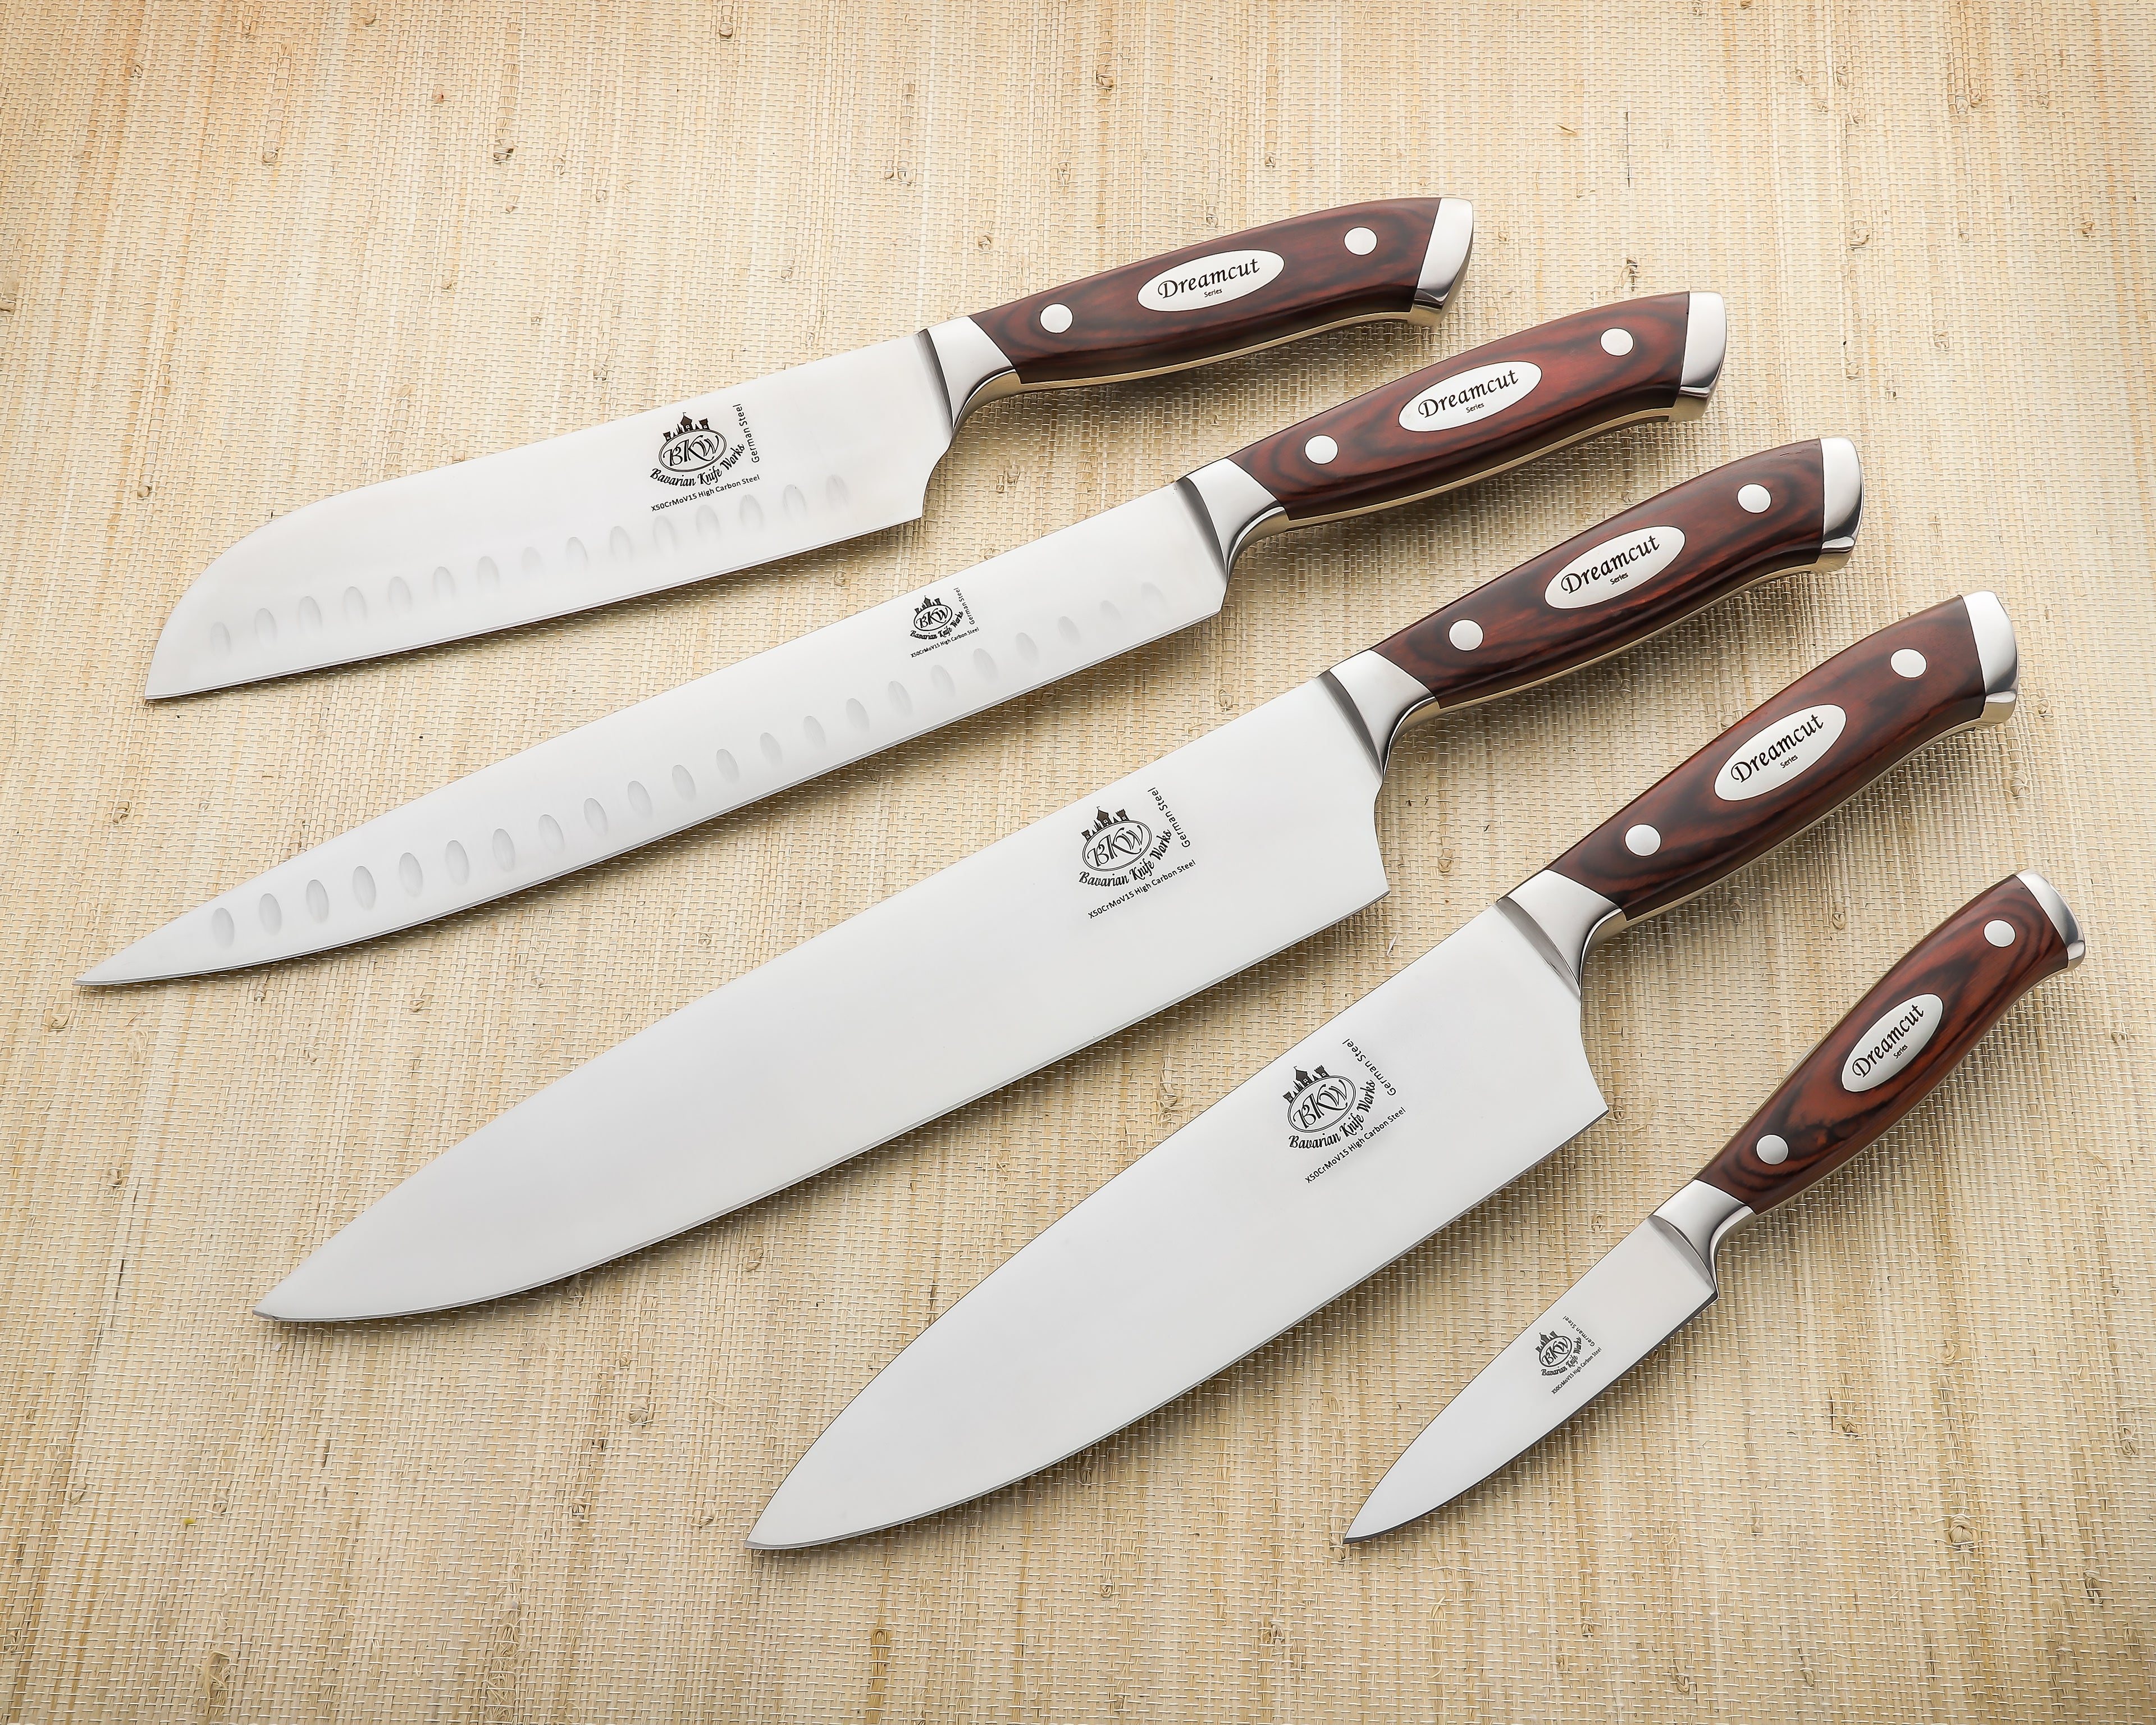 Bavarian Knife Works Premium Quality 10 Inches Chef Knife, Razor Sharp,  Made of German Steel, Ergonomic Pakkawood Handle, Light Weight Easy to  Sharpen